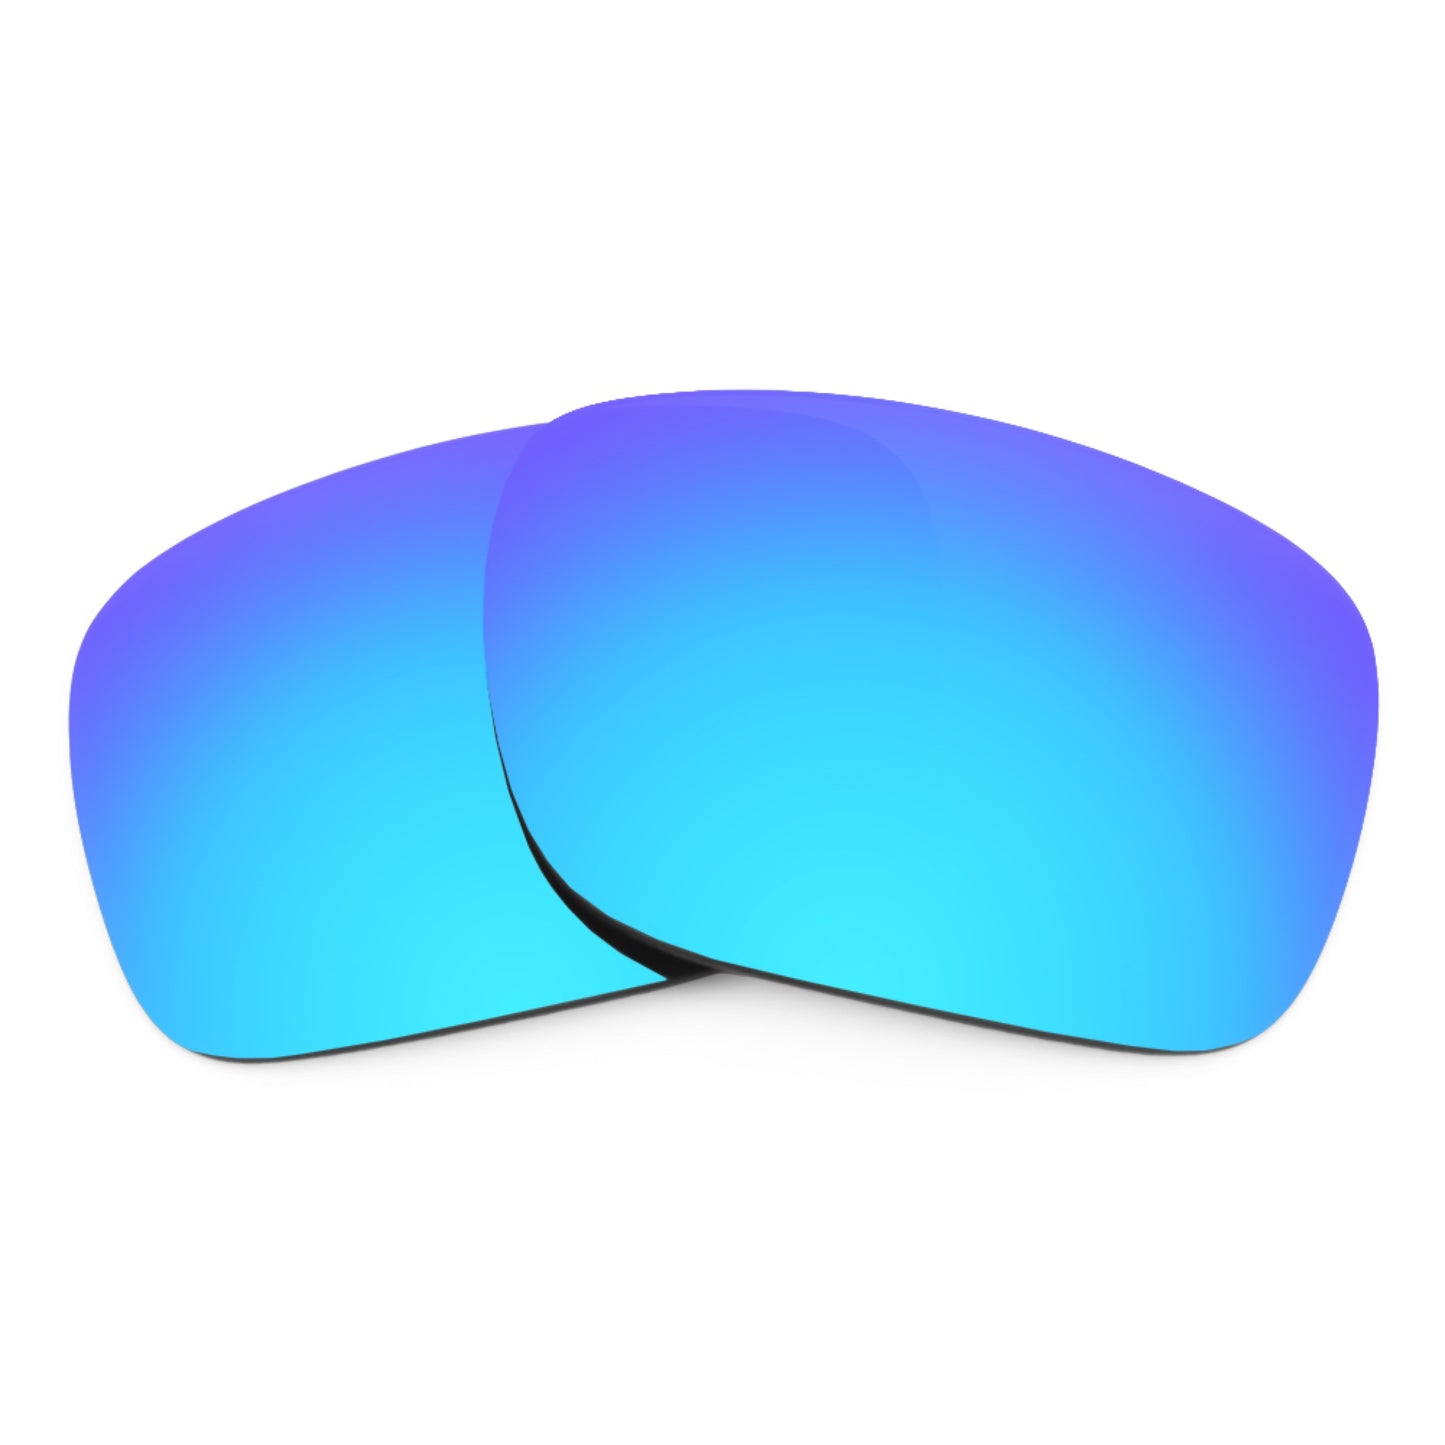 Revant replacement lenses for Oakley Sliver XL (Low Bridge Fit) Non-Polarized Ice Blue